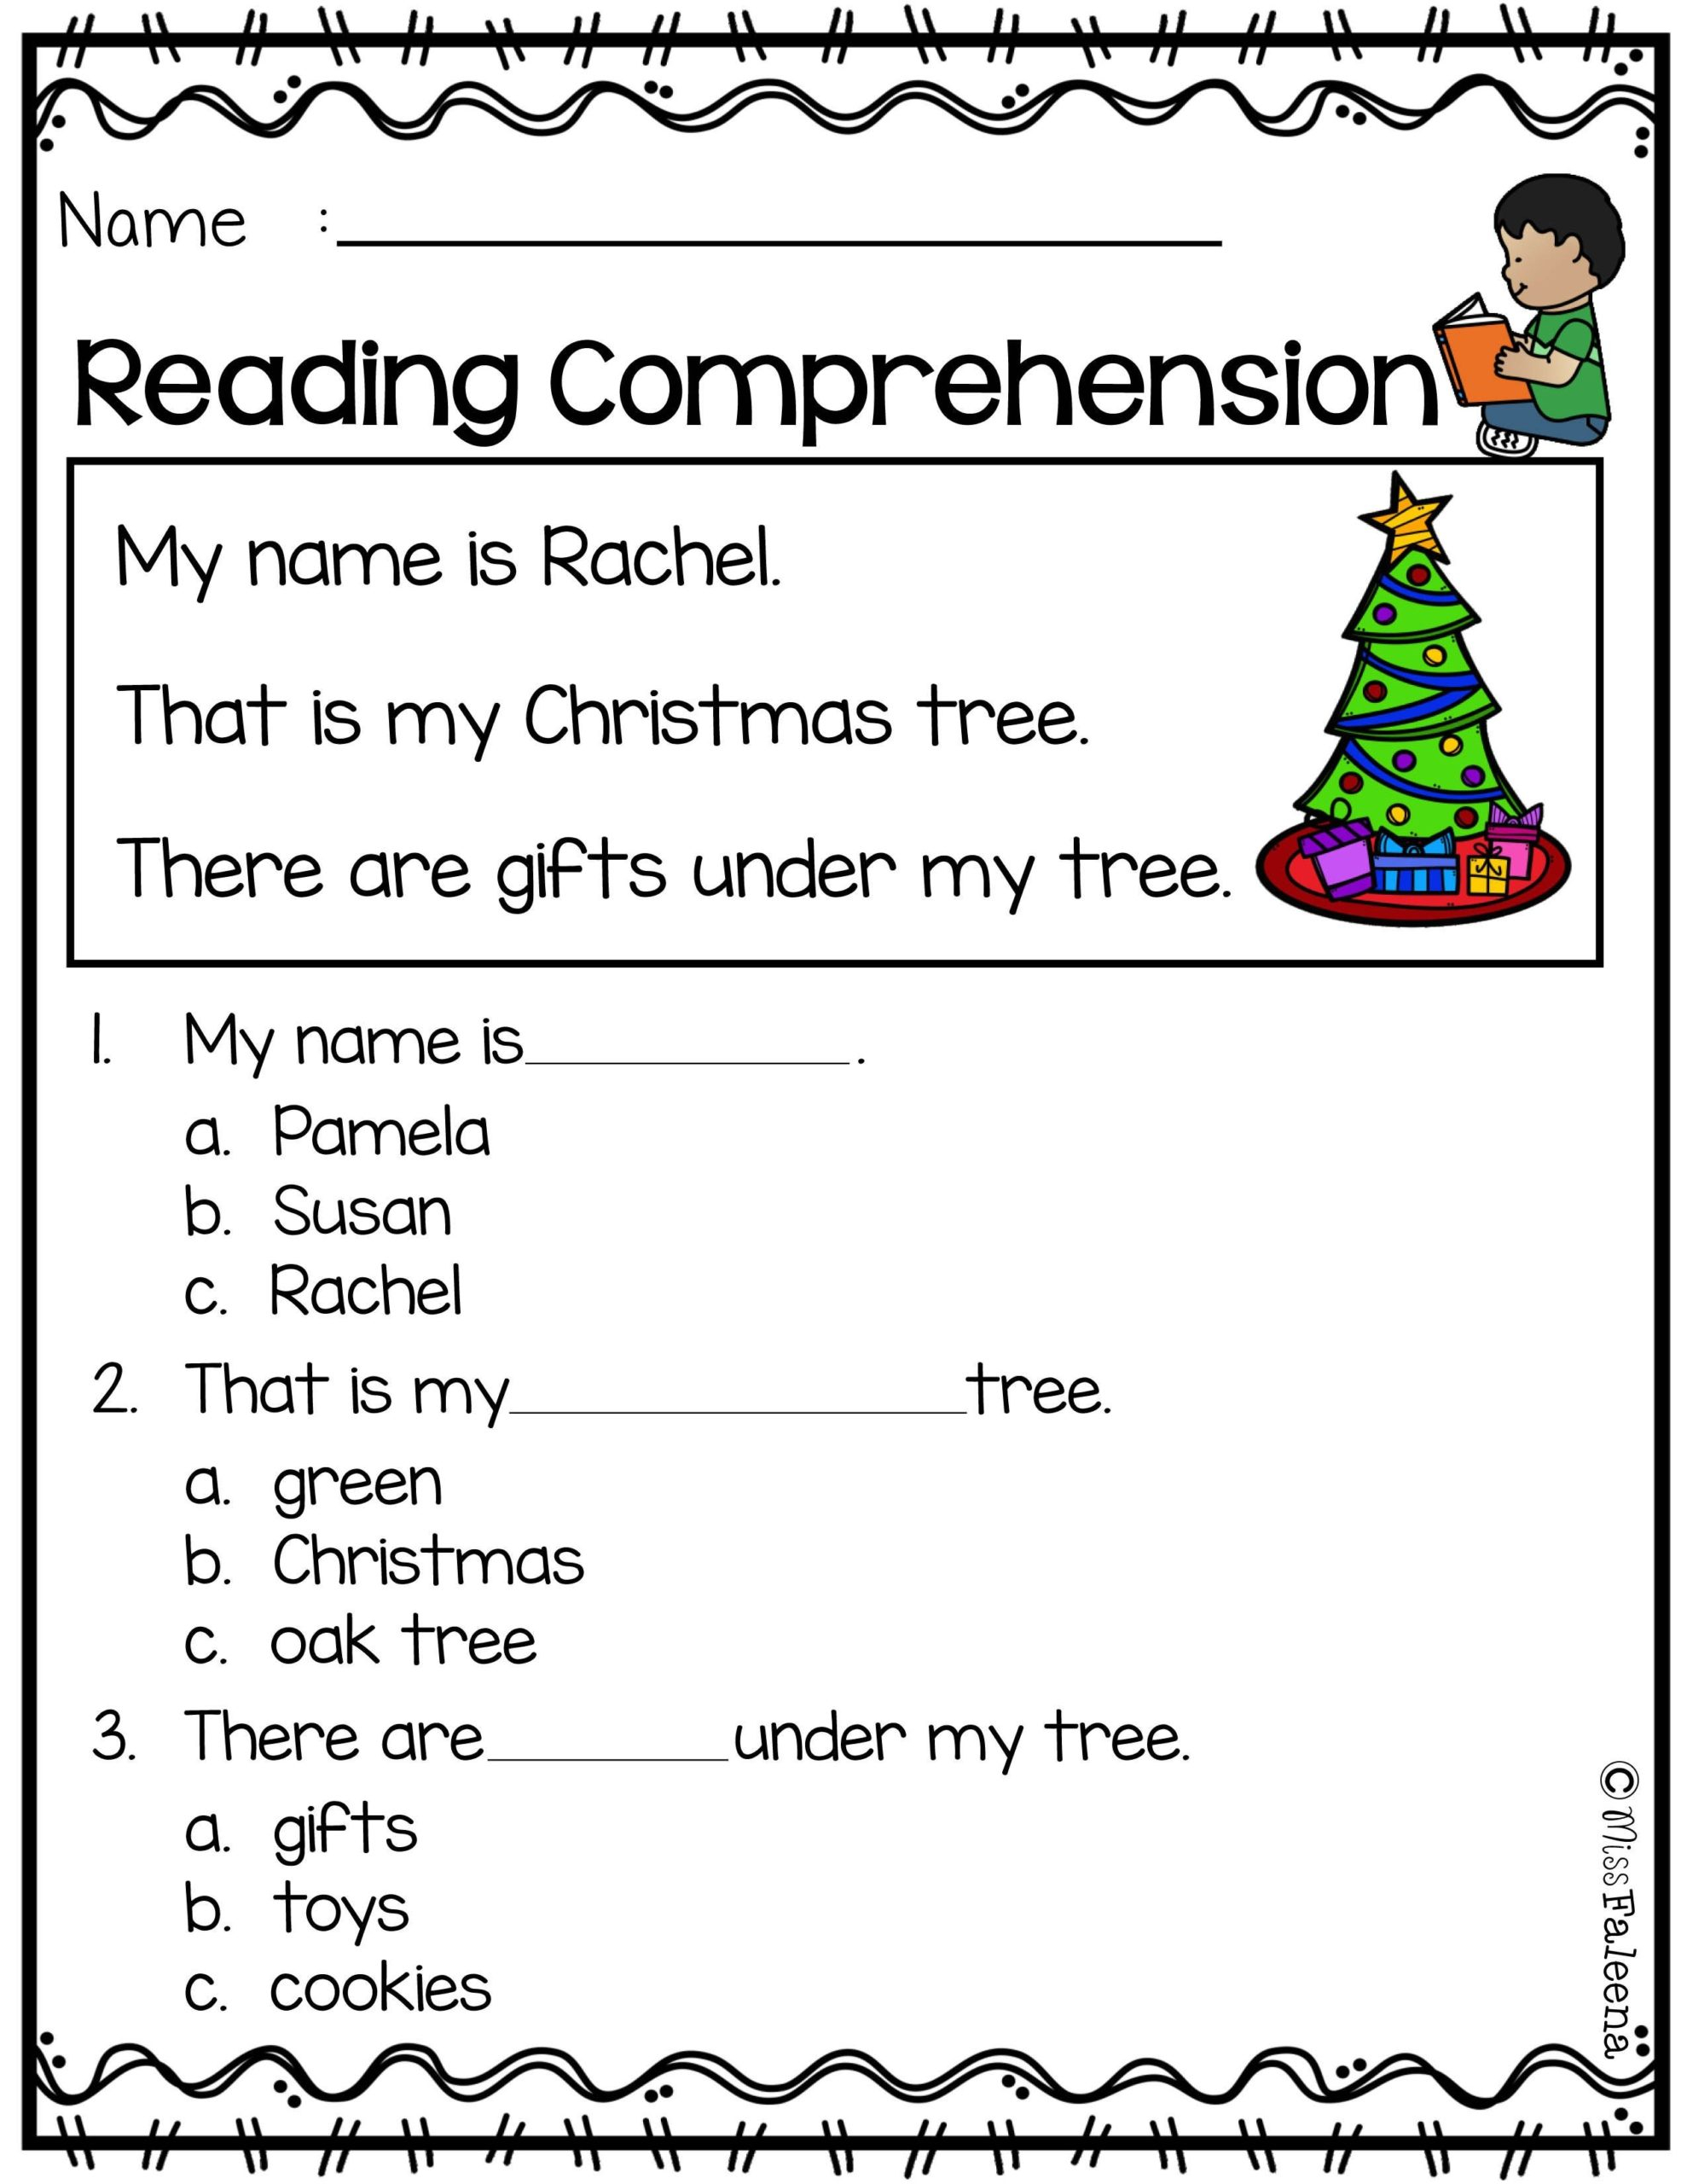 free-printable-third-grade-reading-comprehension-worksheets-k5-learning